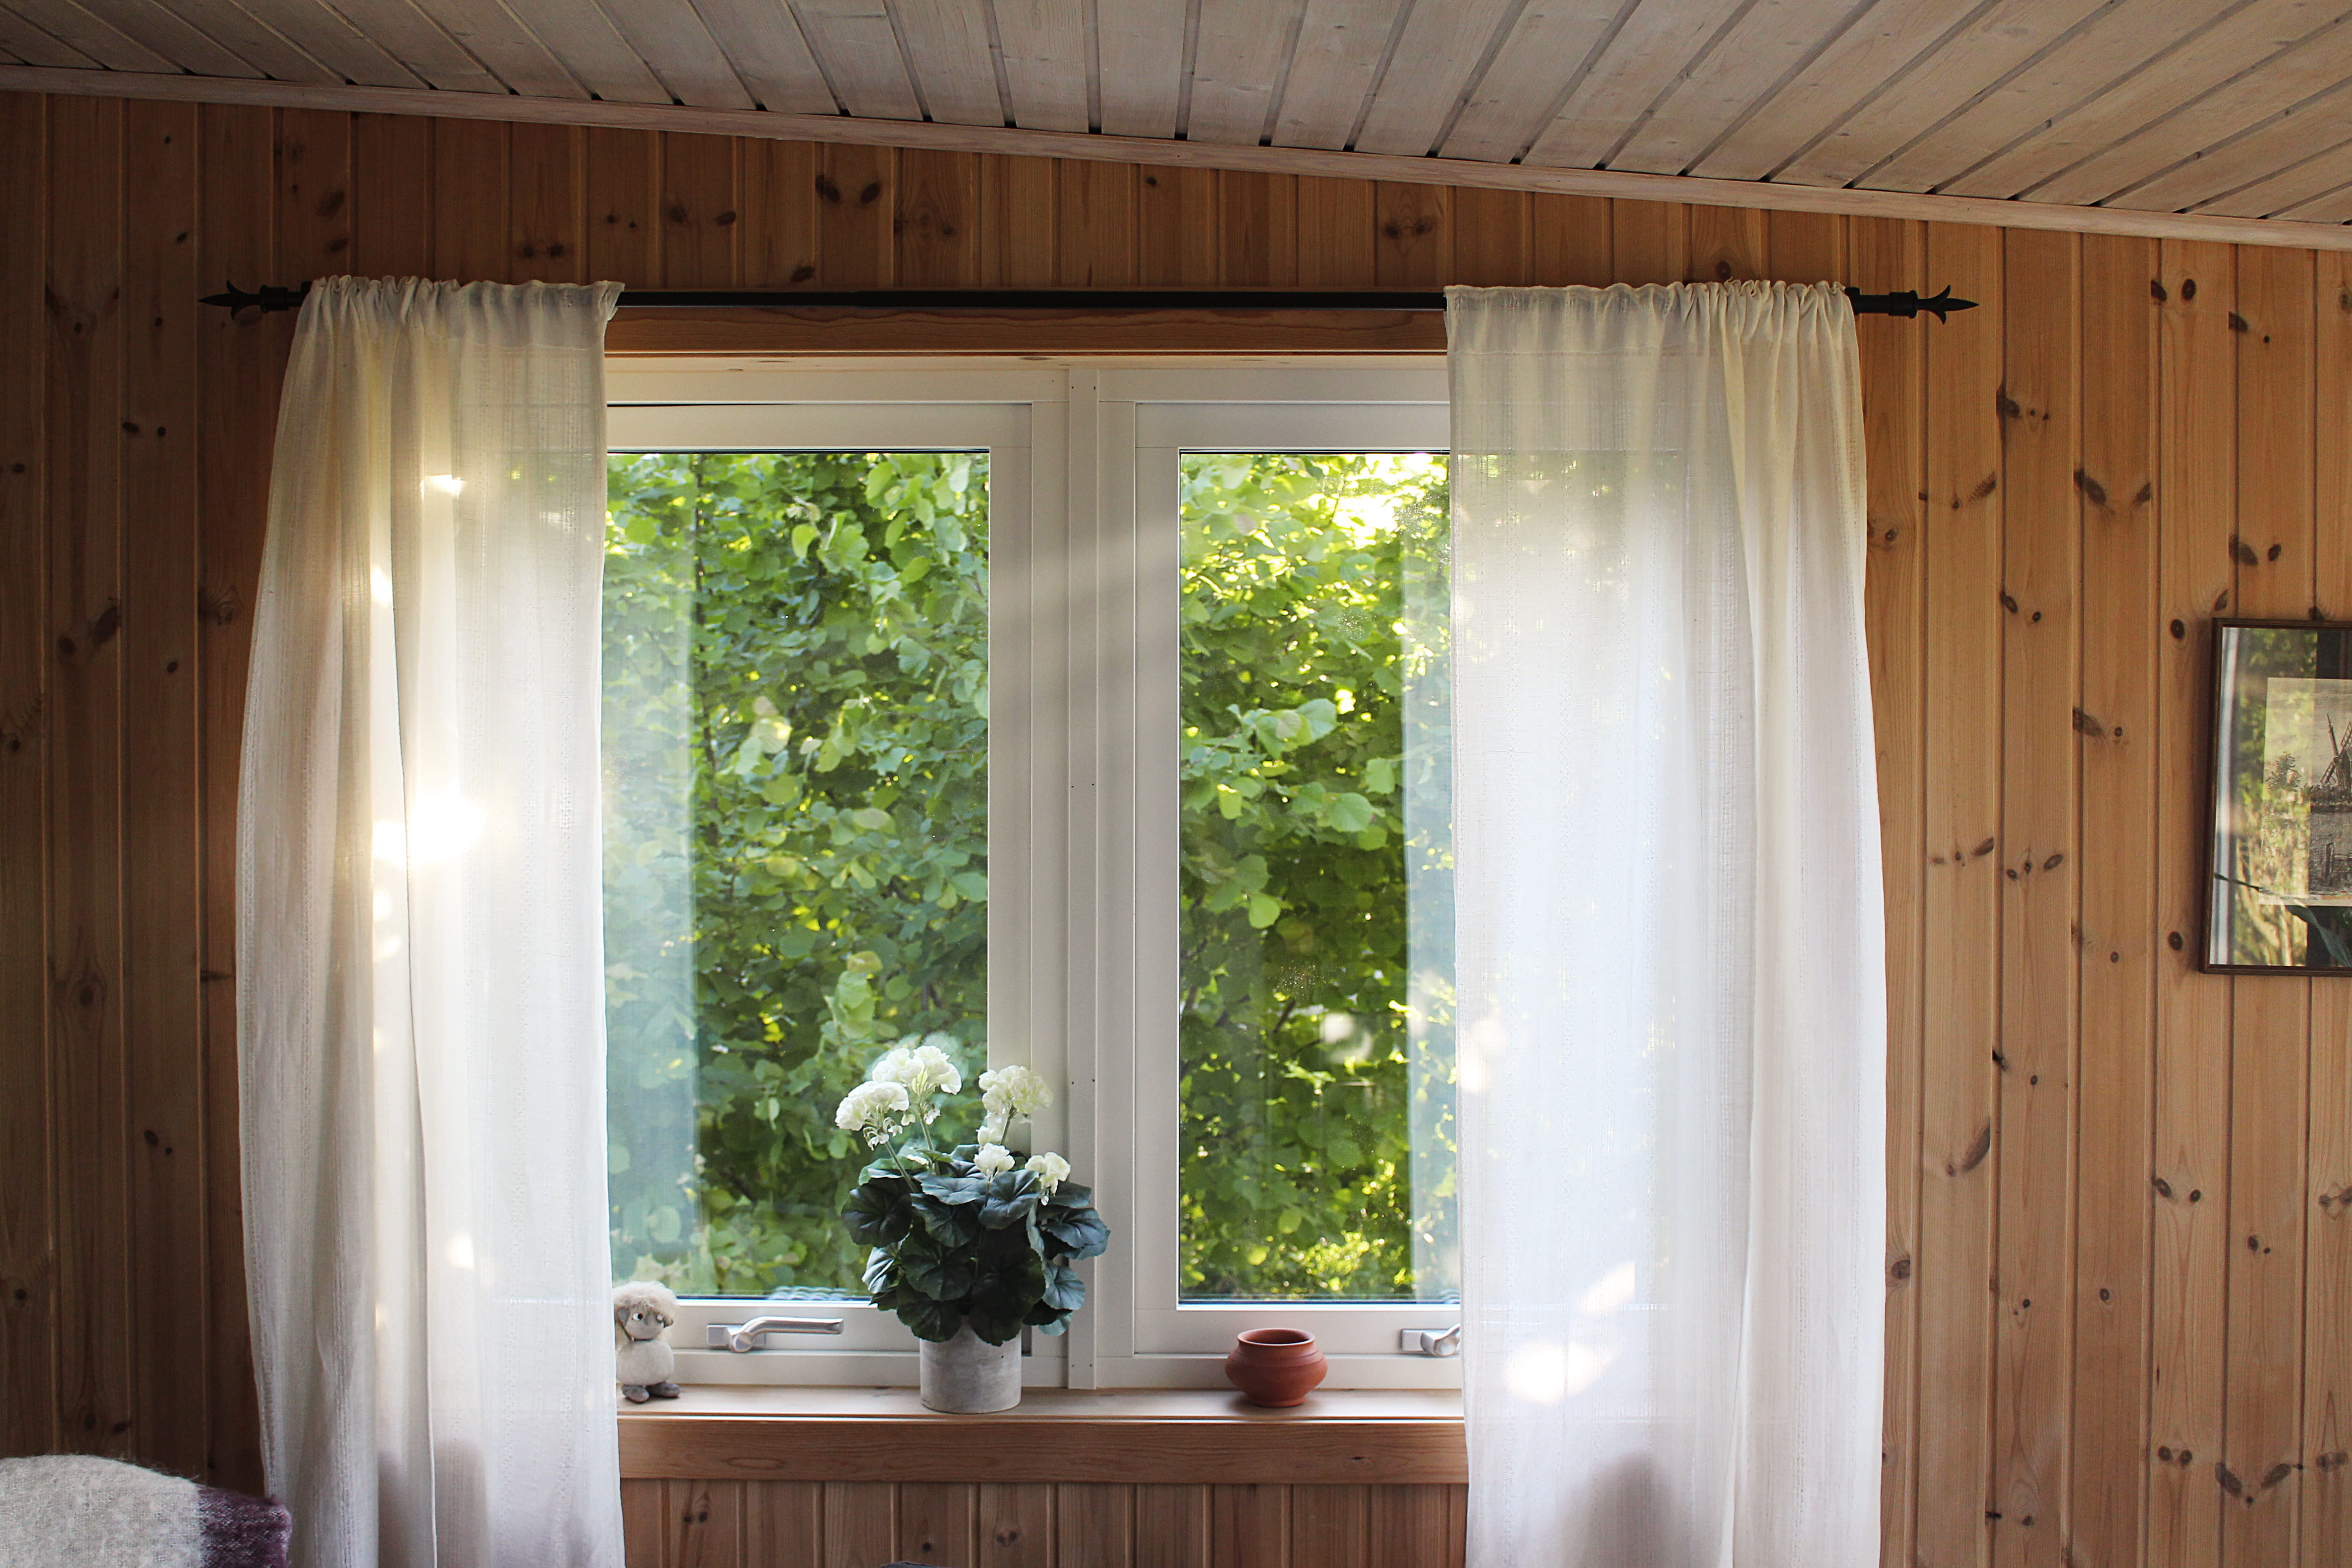 white rod pocket curtain on window frame, two white curtain windows